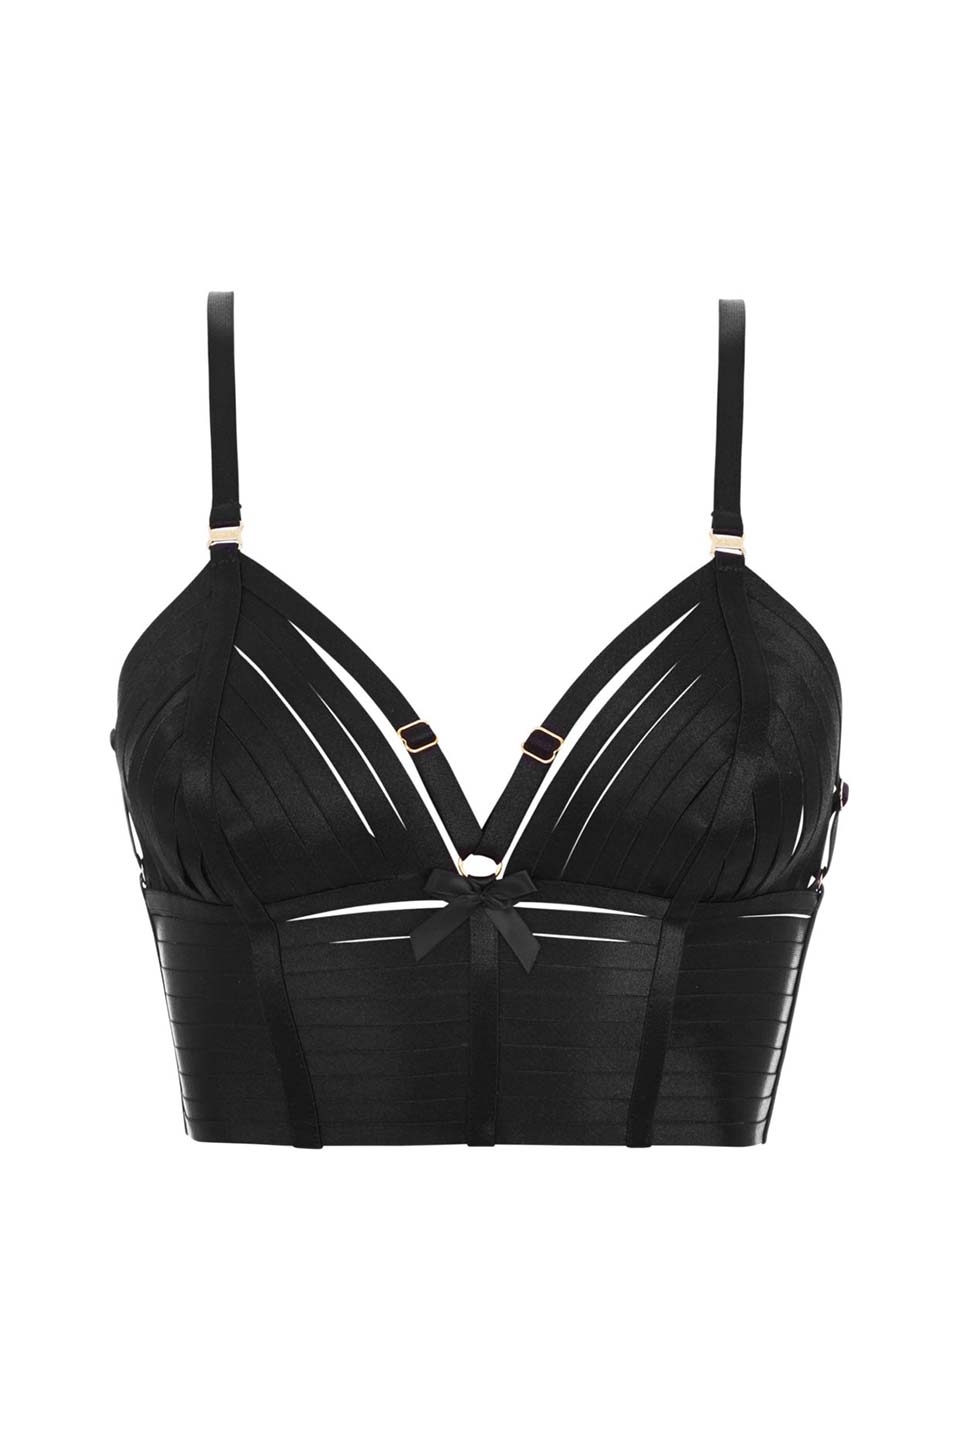 Shop online trendy Black Bras from Atelier Bordelle Fashion designer. Product gallery 1